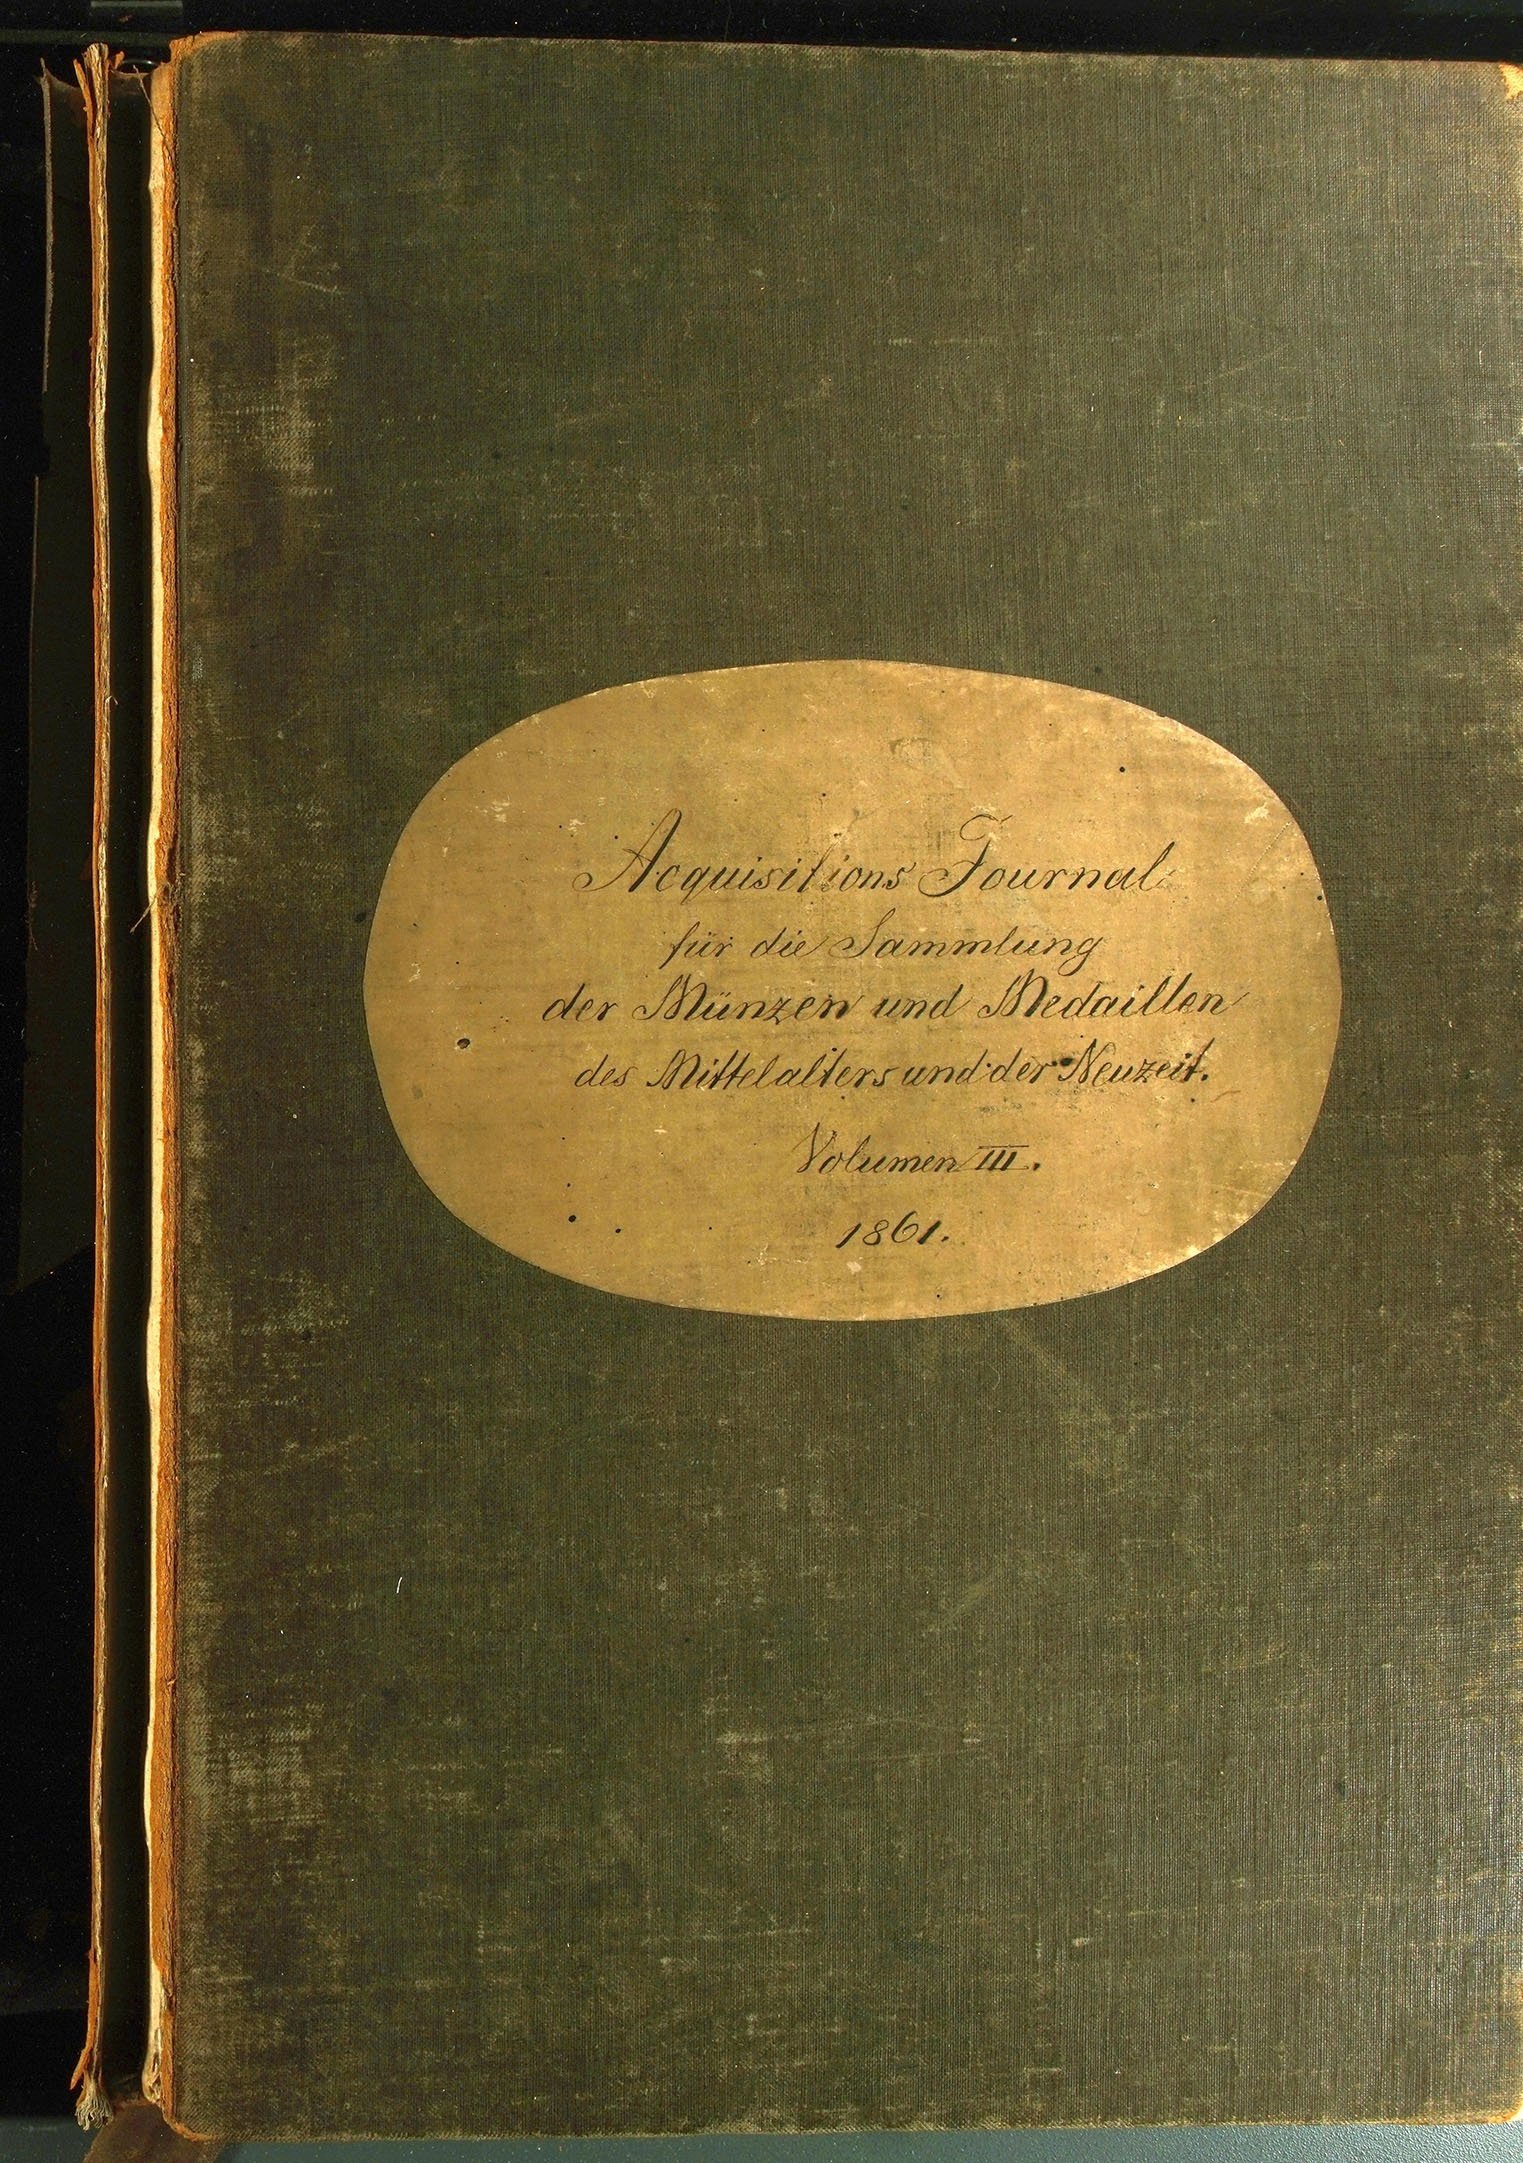 Acquisitions Journal 1861-1868 (Münzkabinett, Staatliche Museen zu Berlin CC BY-NC-SA)